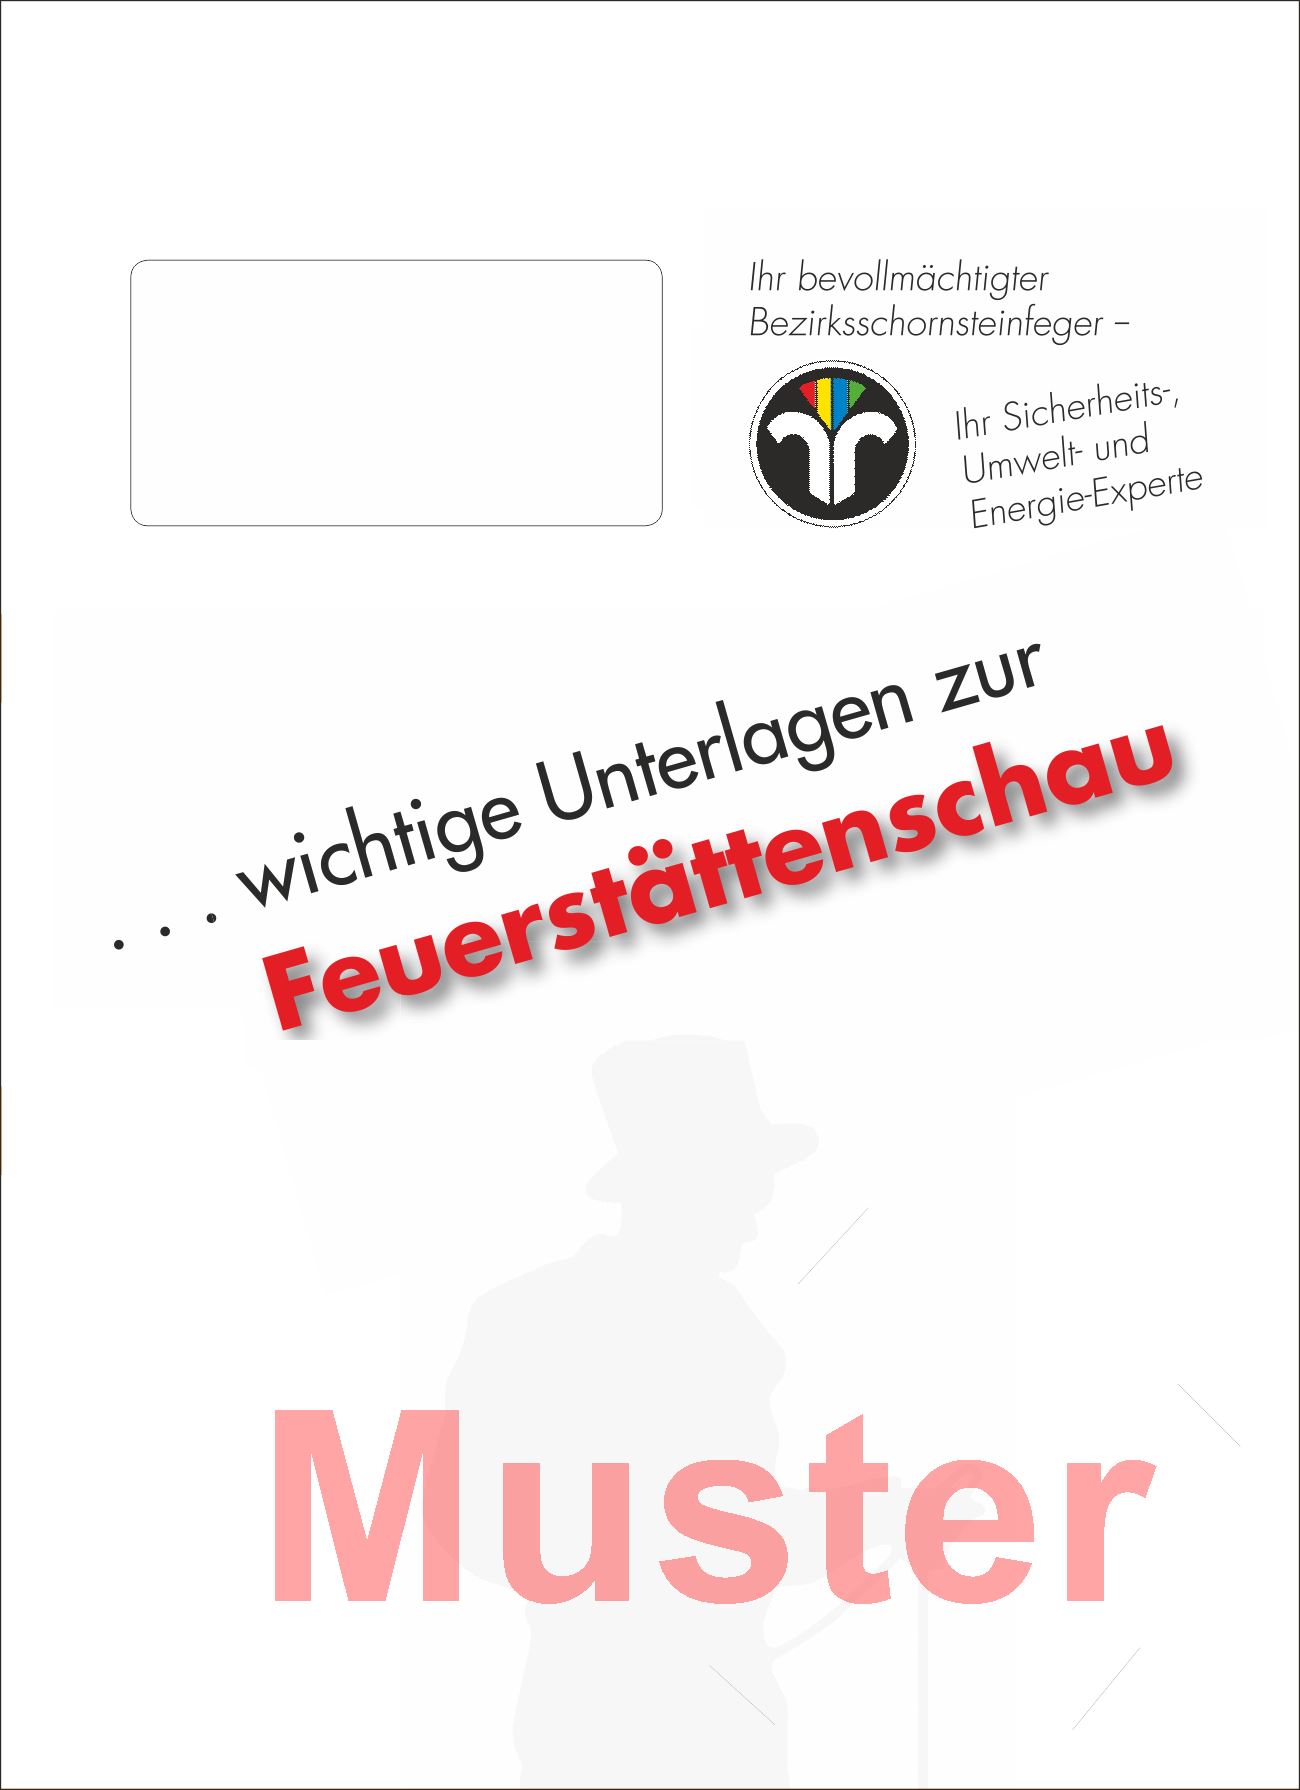 Schriftverkehrmappen / Kundenmappen "Feuerstättenschau"